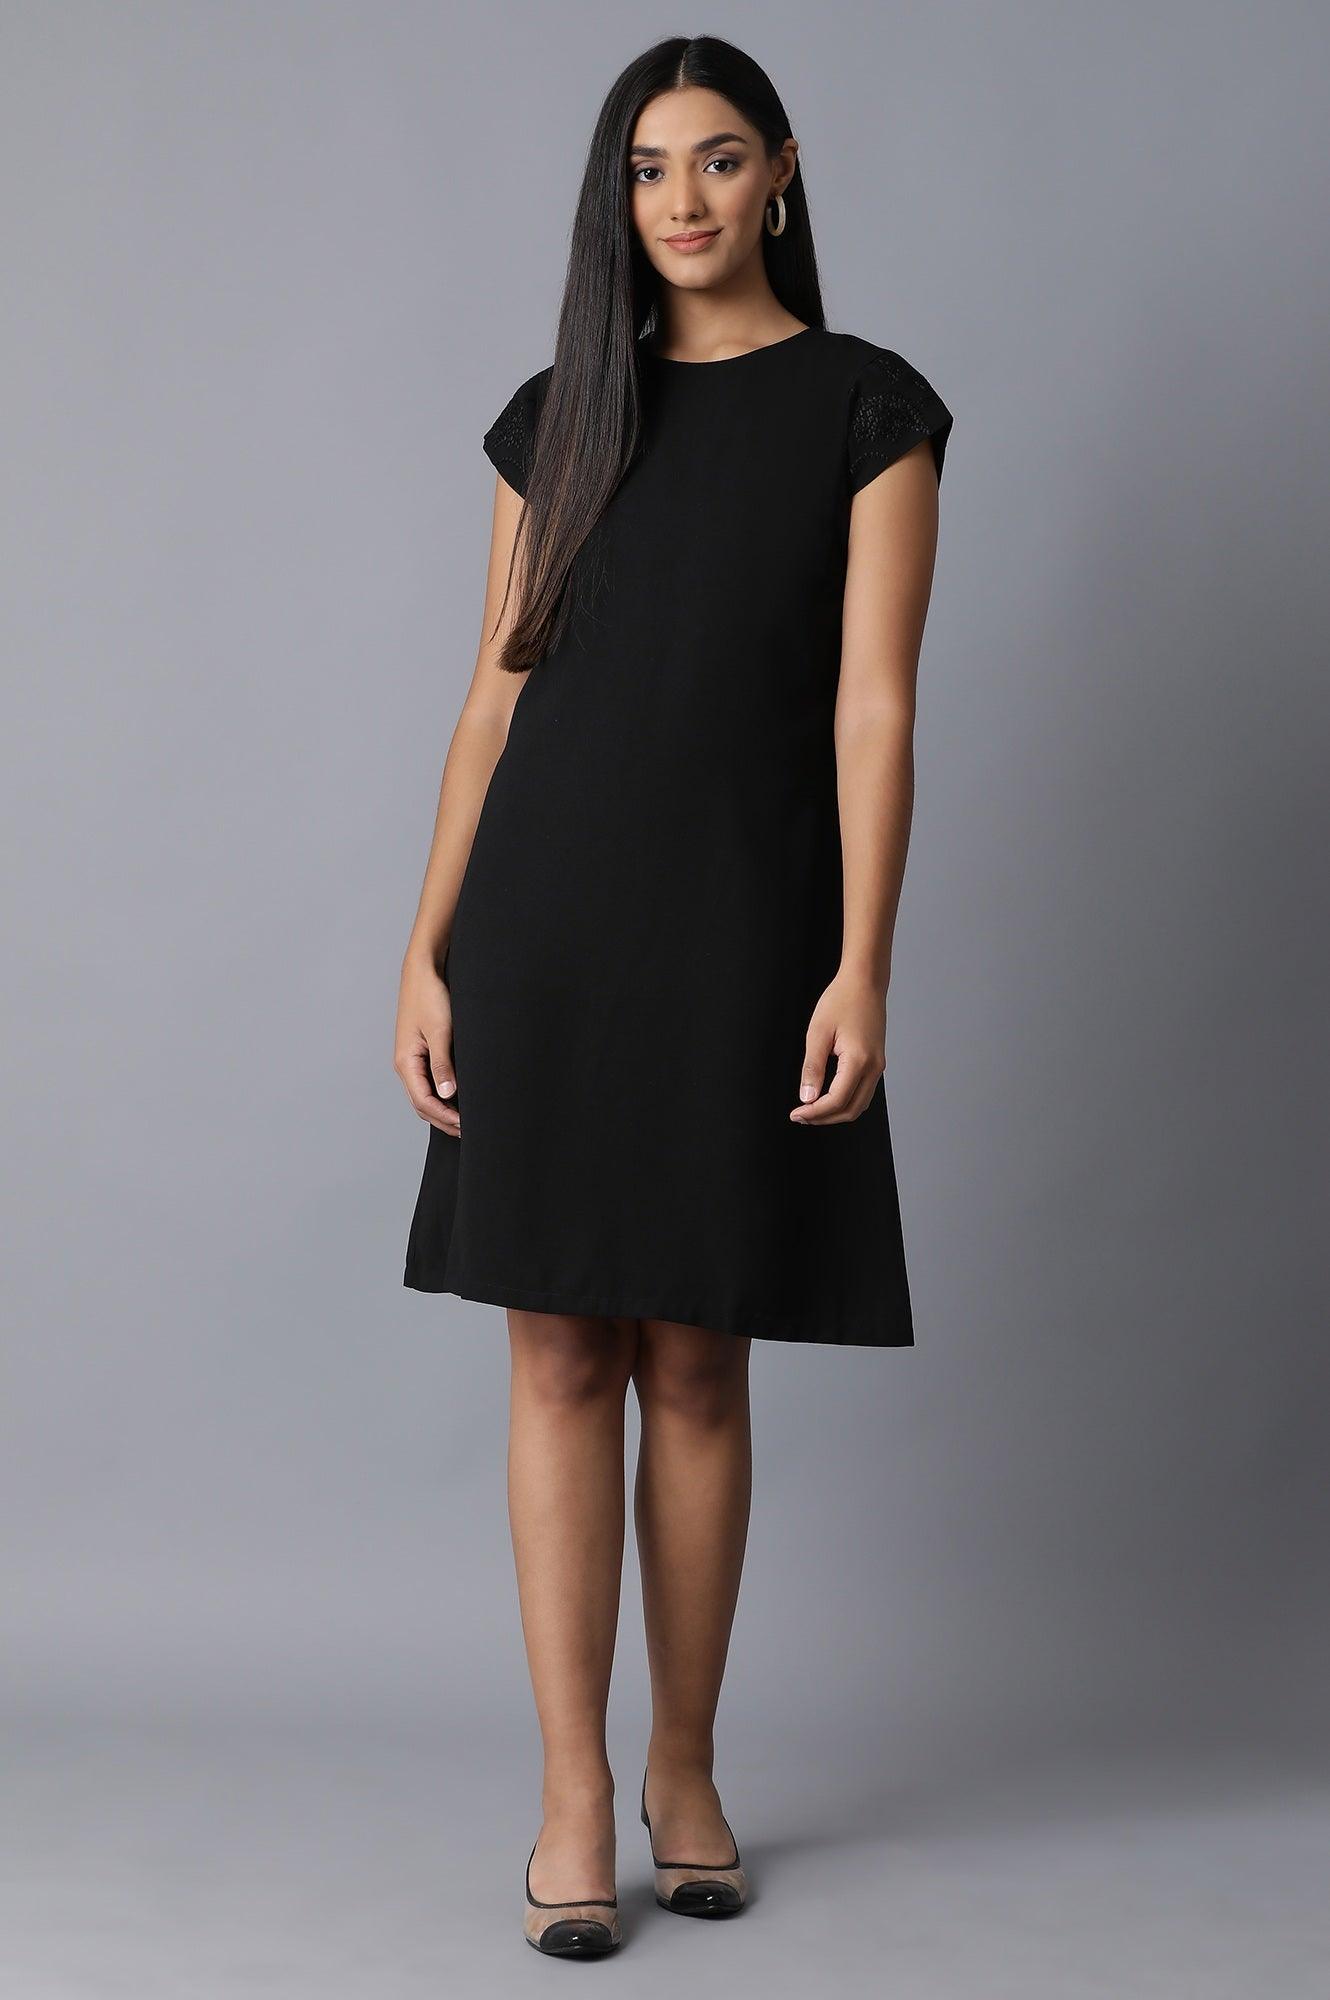 Black Multicoloured Stripe Printed Dress - wforwoman